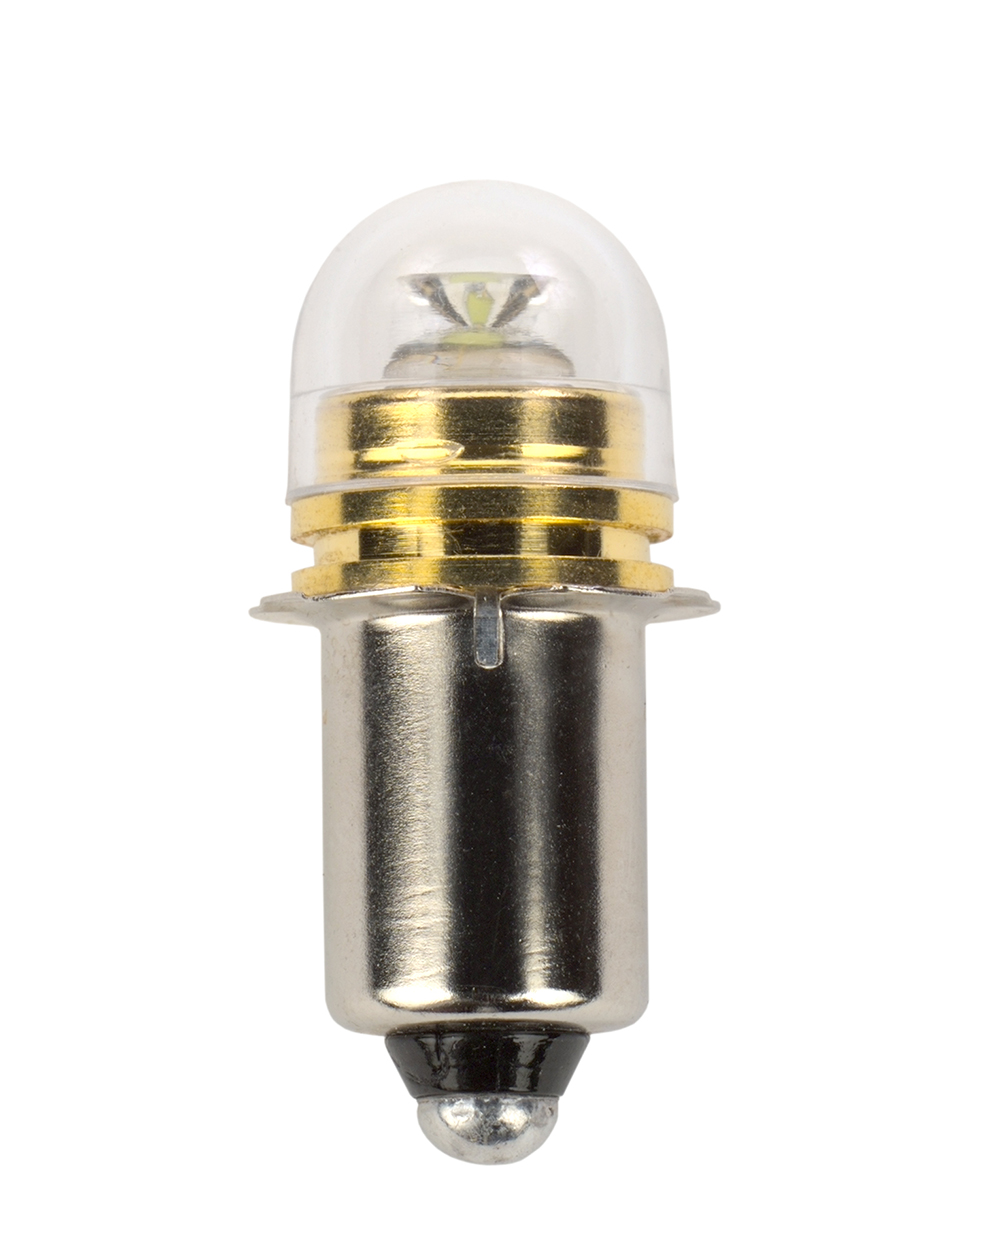 5pcs 14V High Pressure Xenon Replacement Lamp Bulb for Ultrafire Flashlight G140 